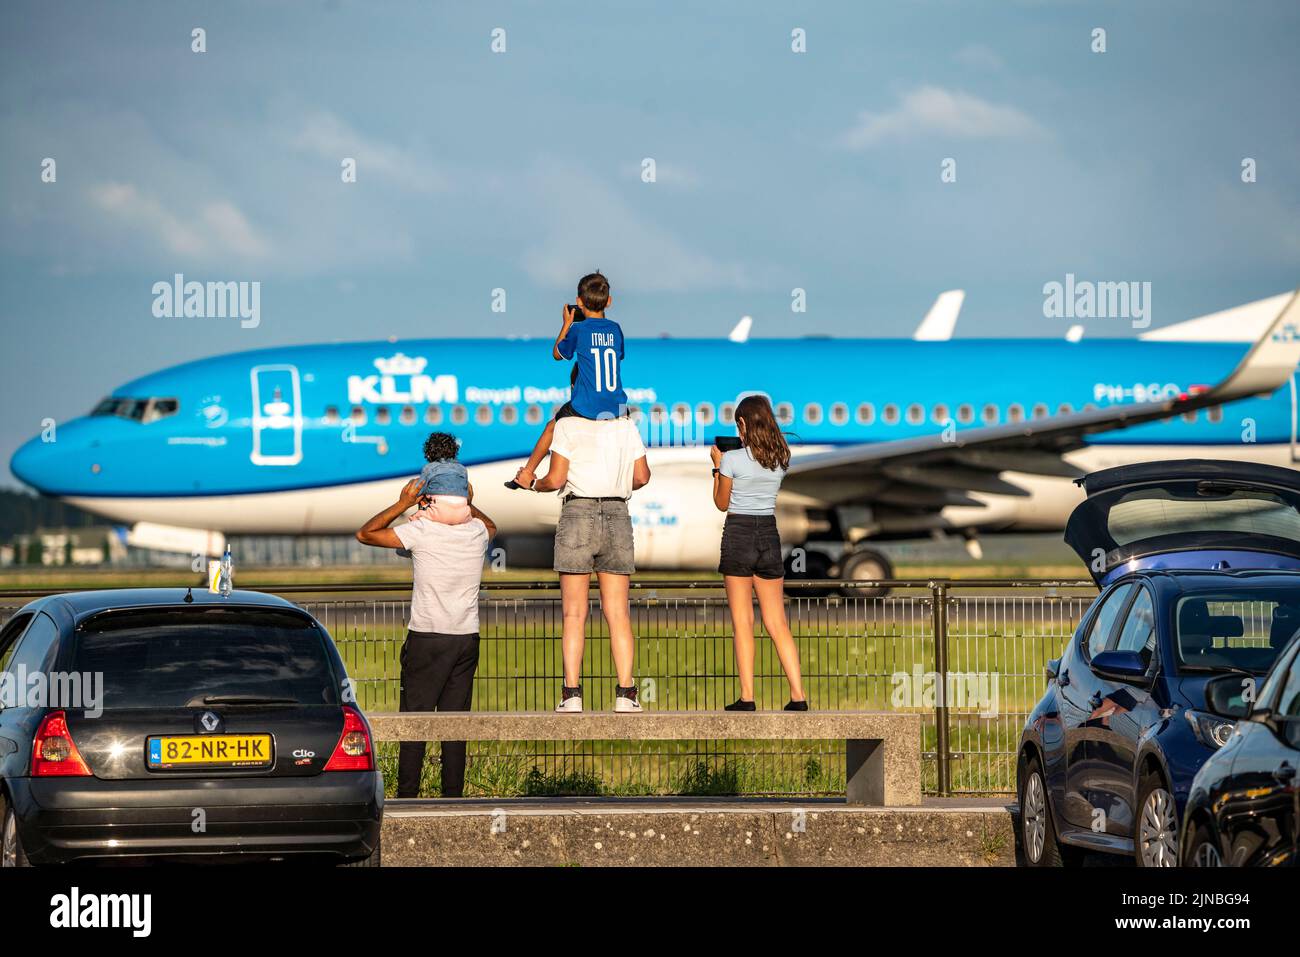 Amsterdam Shiphol Airport, Polderbaan, one of 6 runways, spotter spot, see planes up close, KLM, Stock Photo